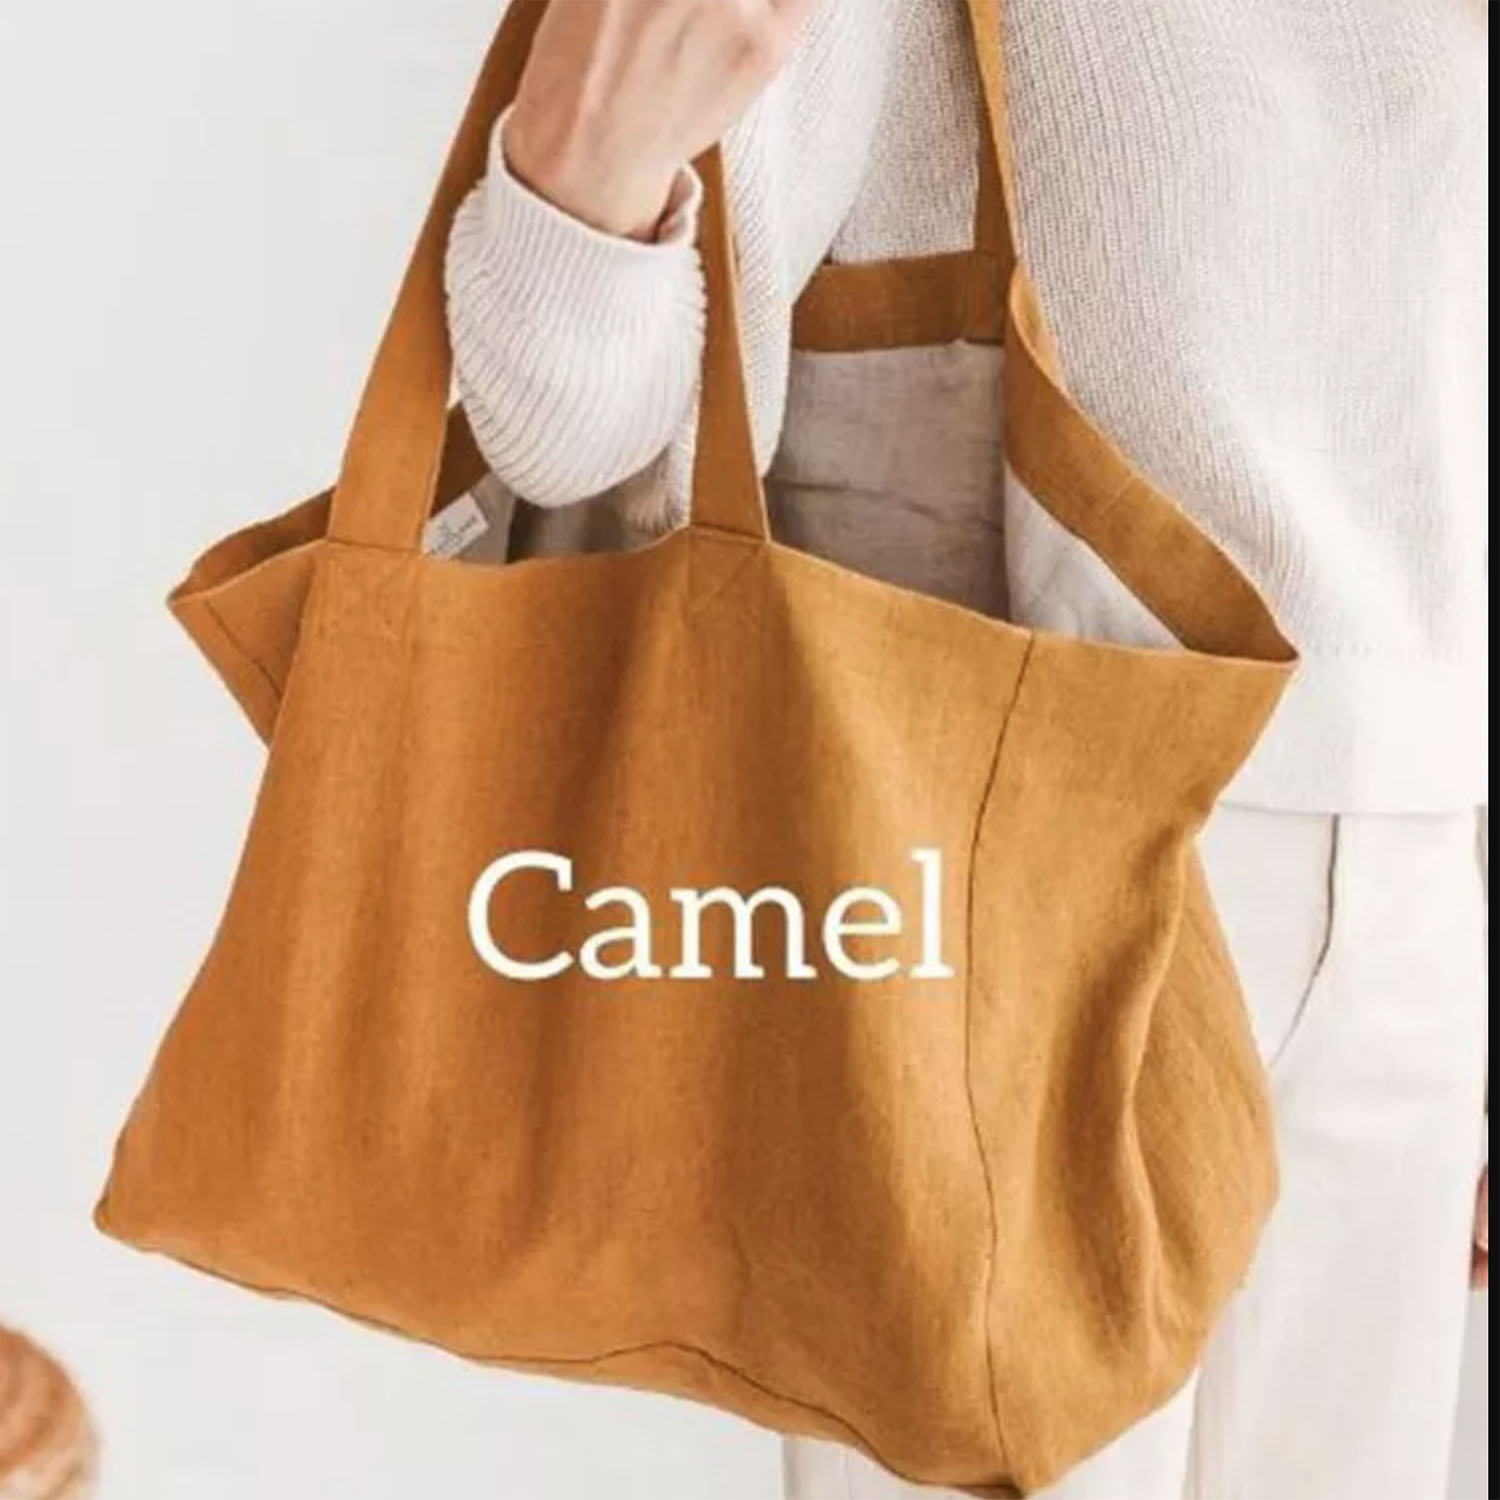 Camel linen bag example